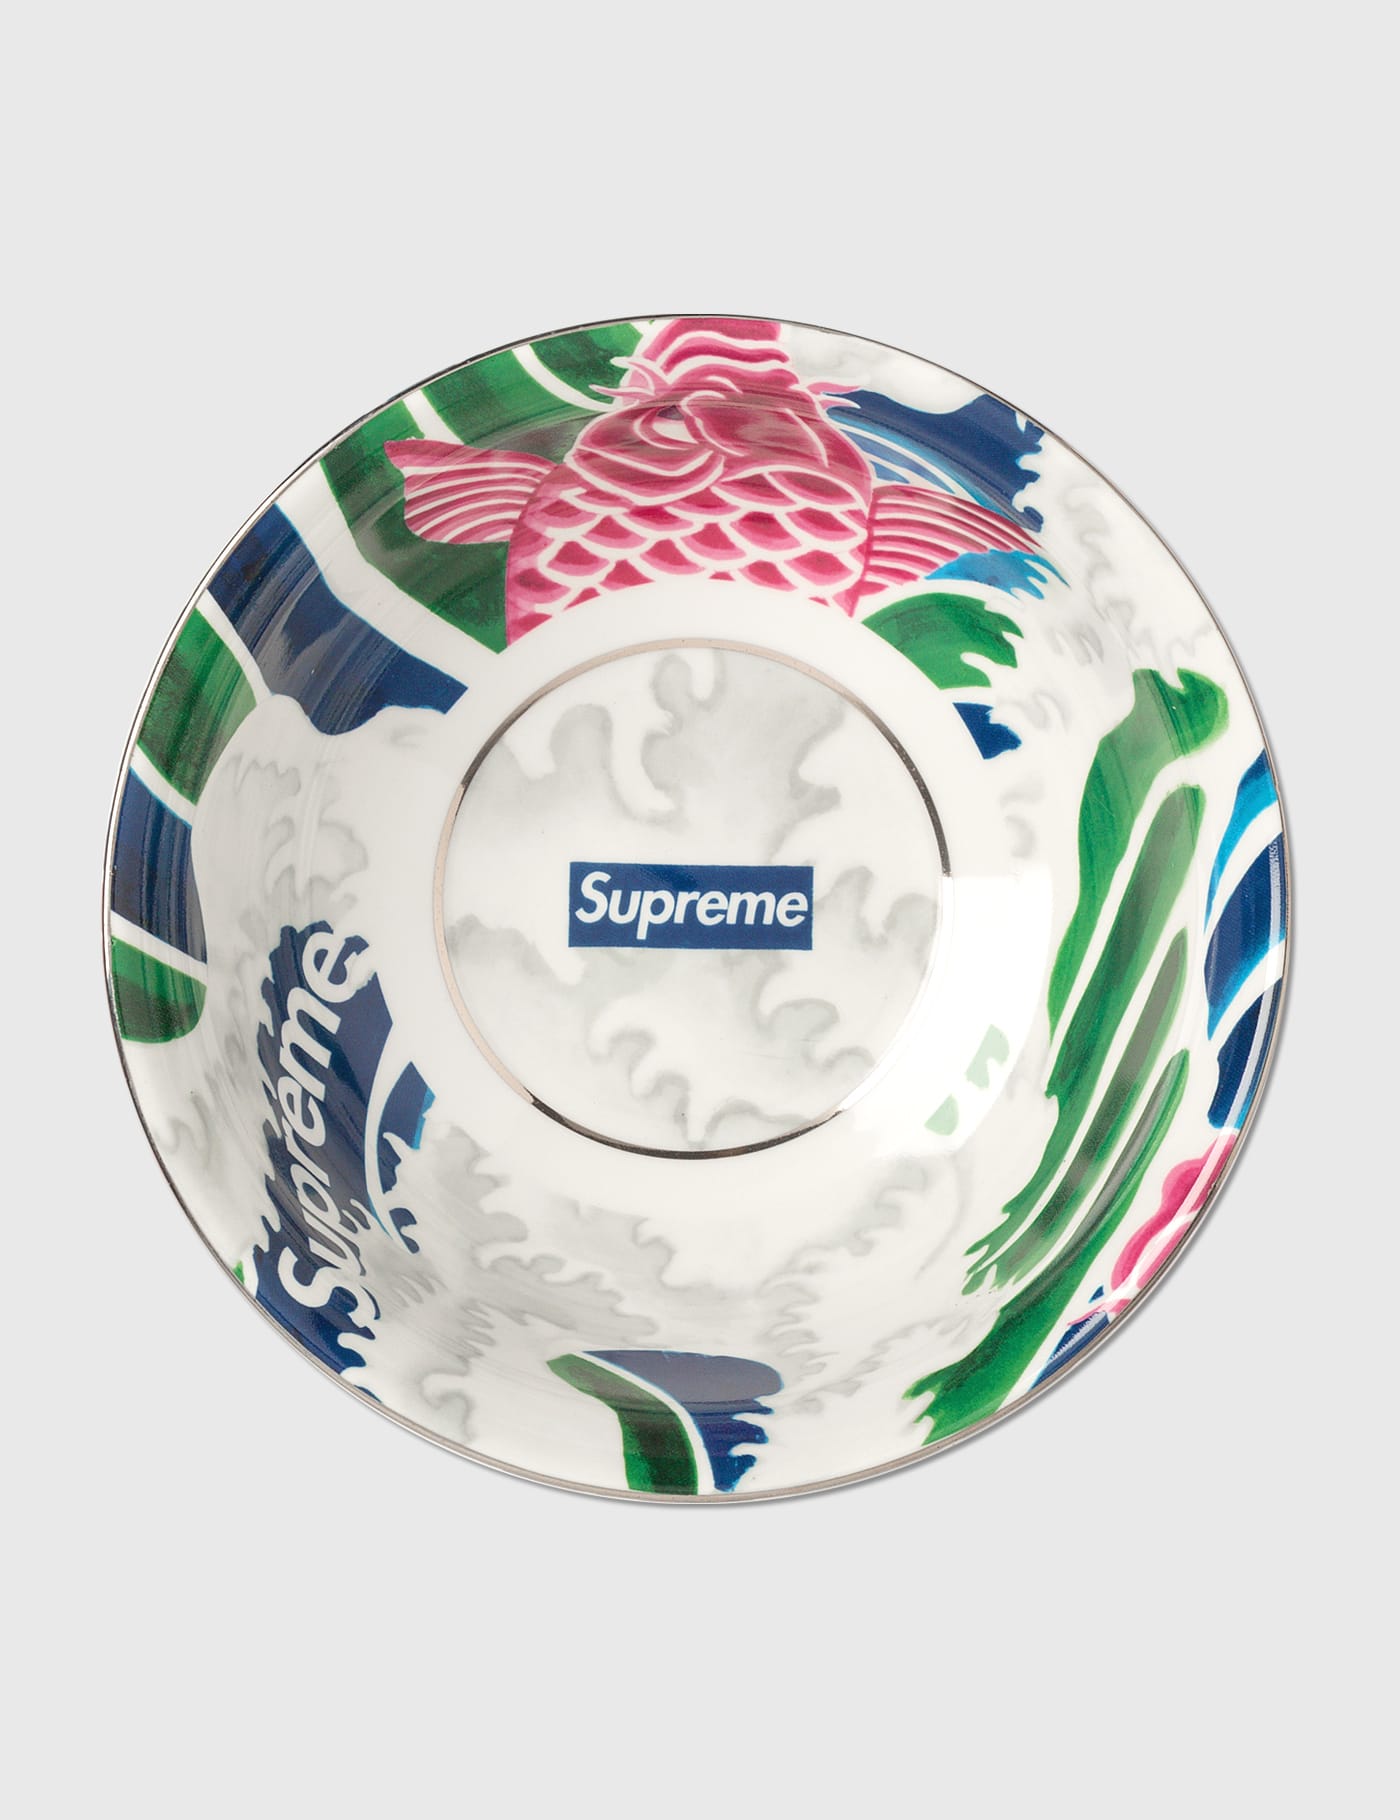 Supreme - Supreme Waves Ceramic Bowl | HBX - Globally Curated 